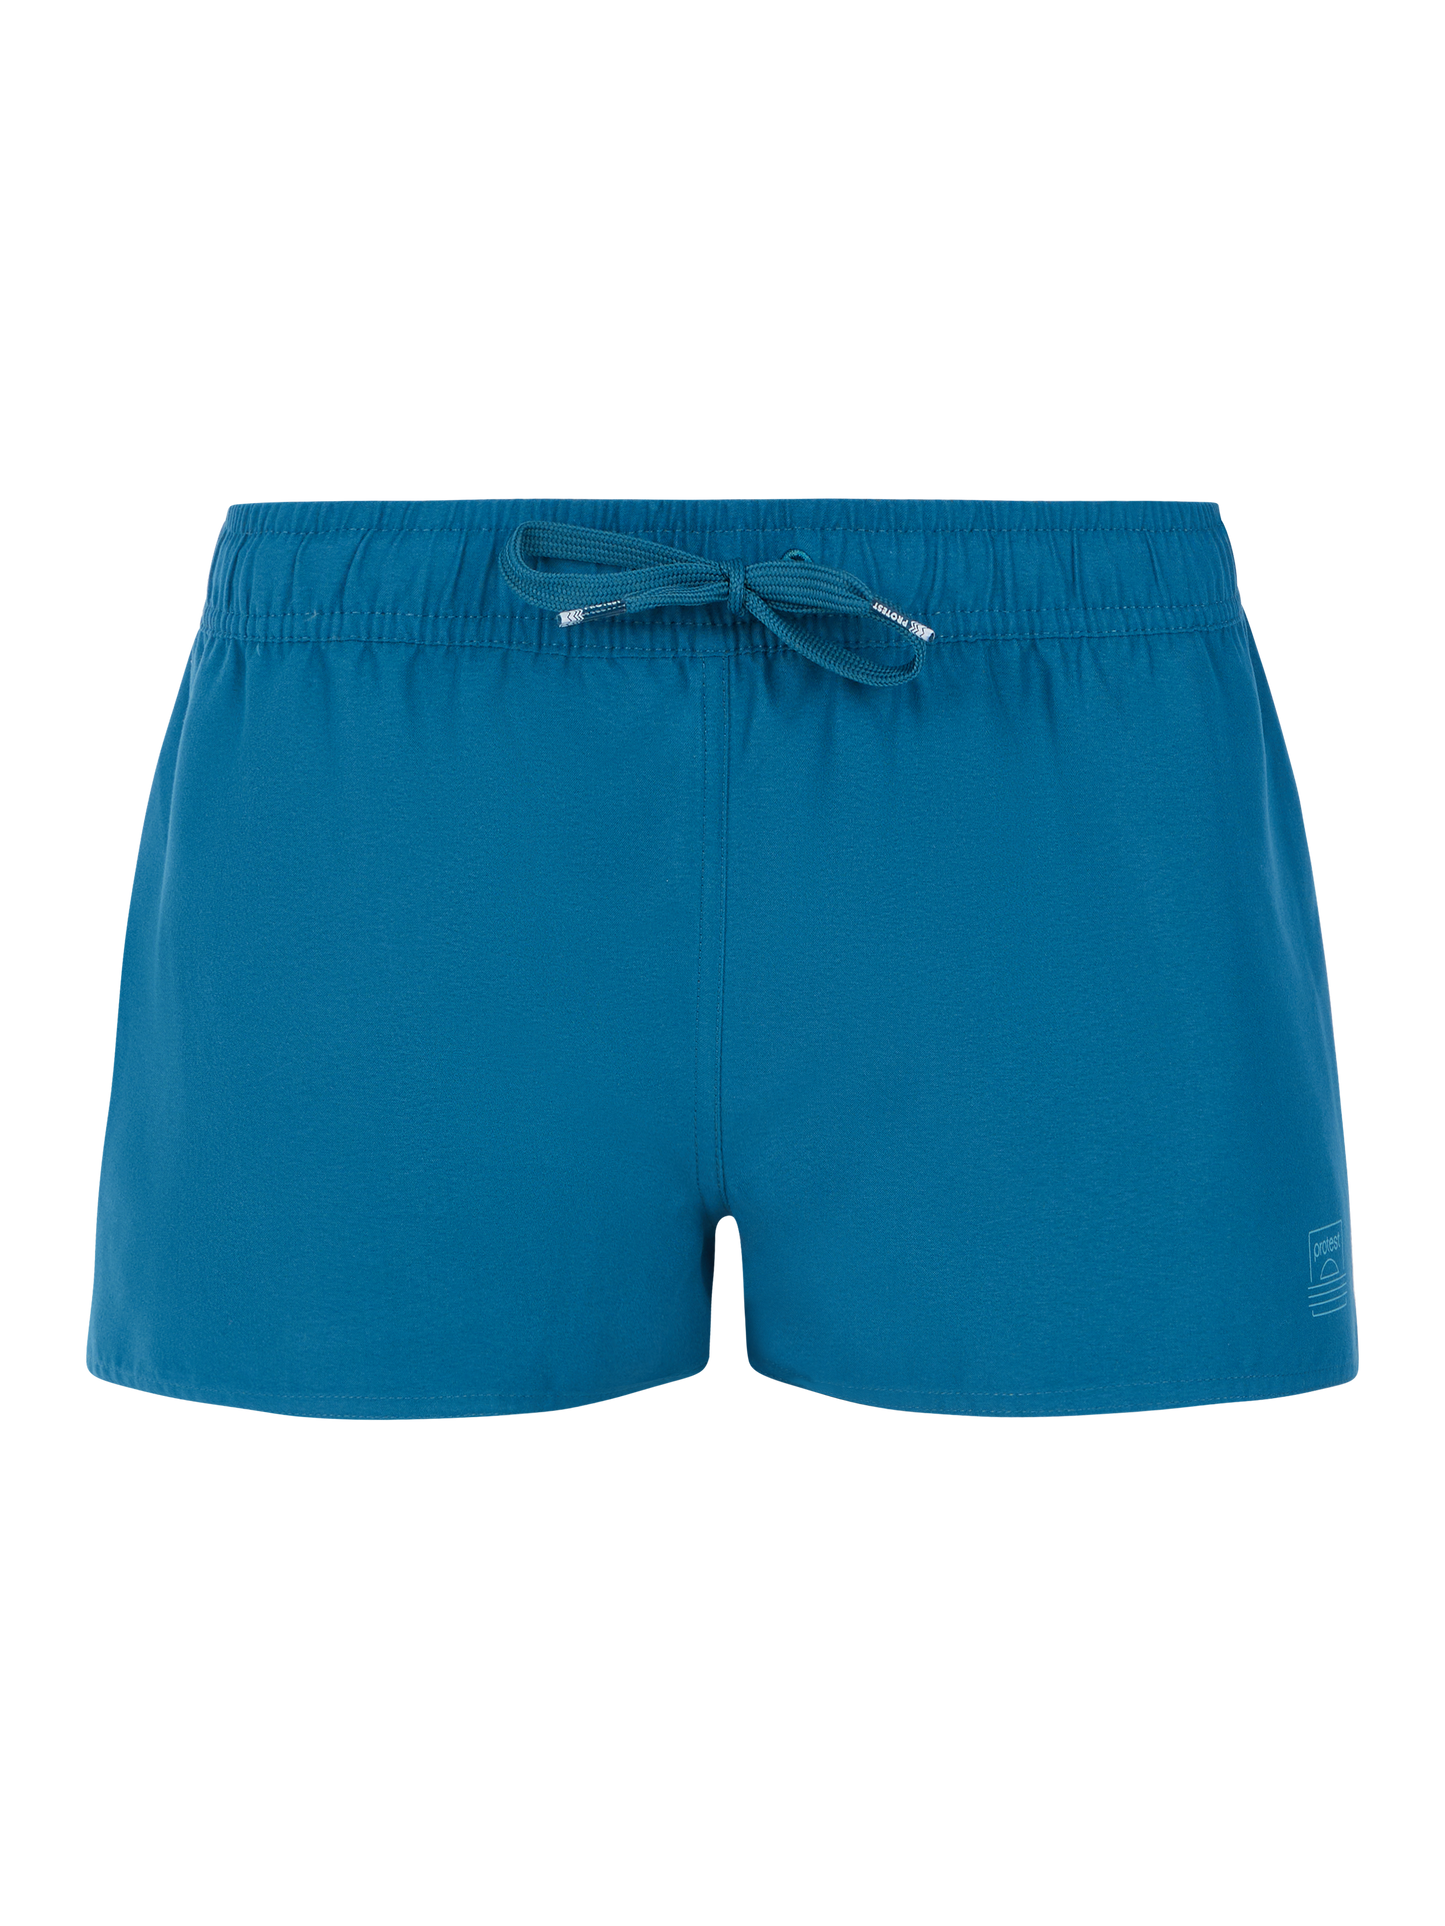 Protest Evi Swim Shorts in Raku Blue